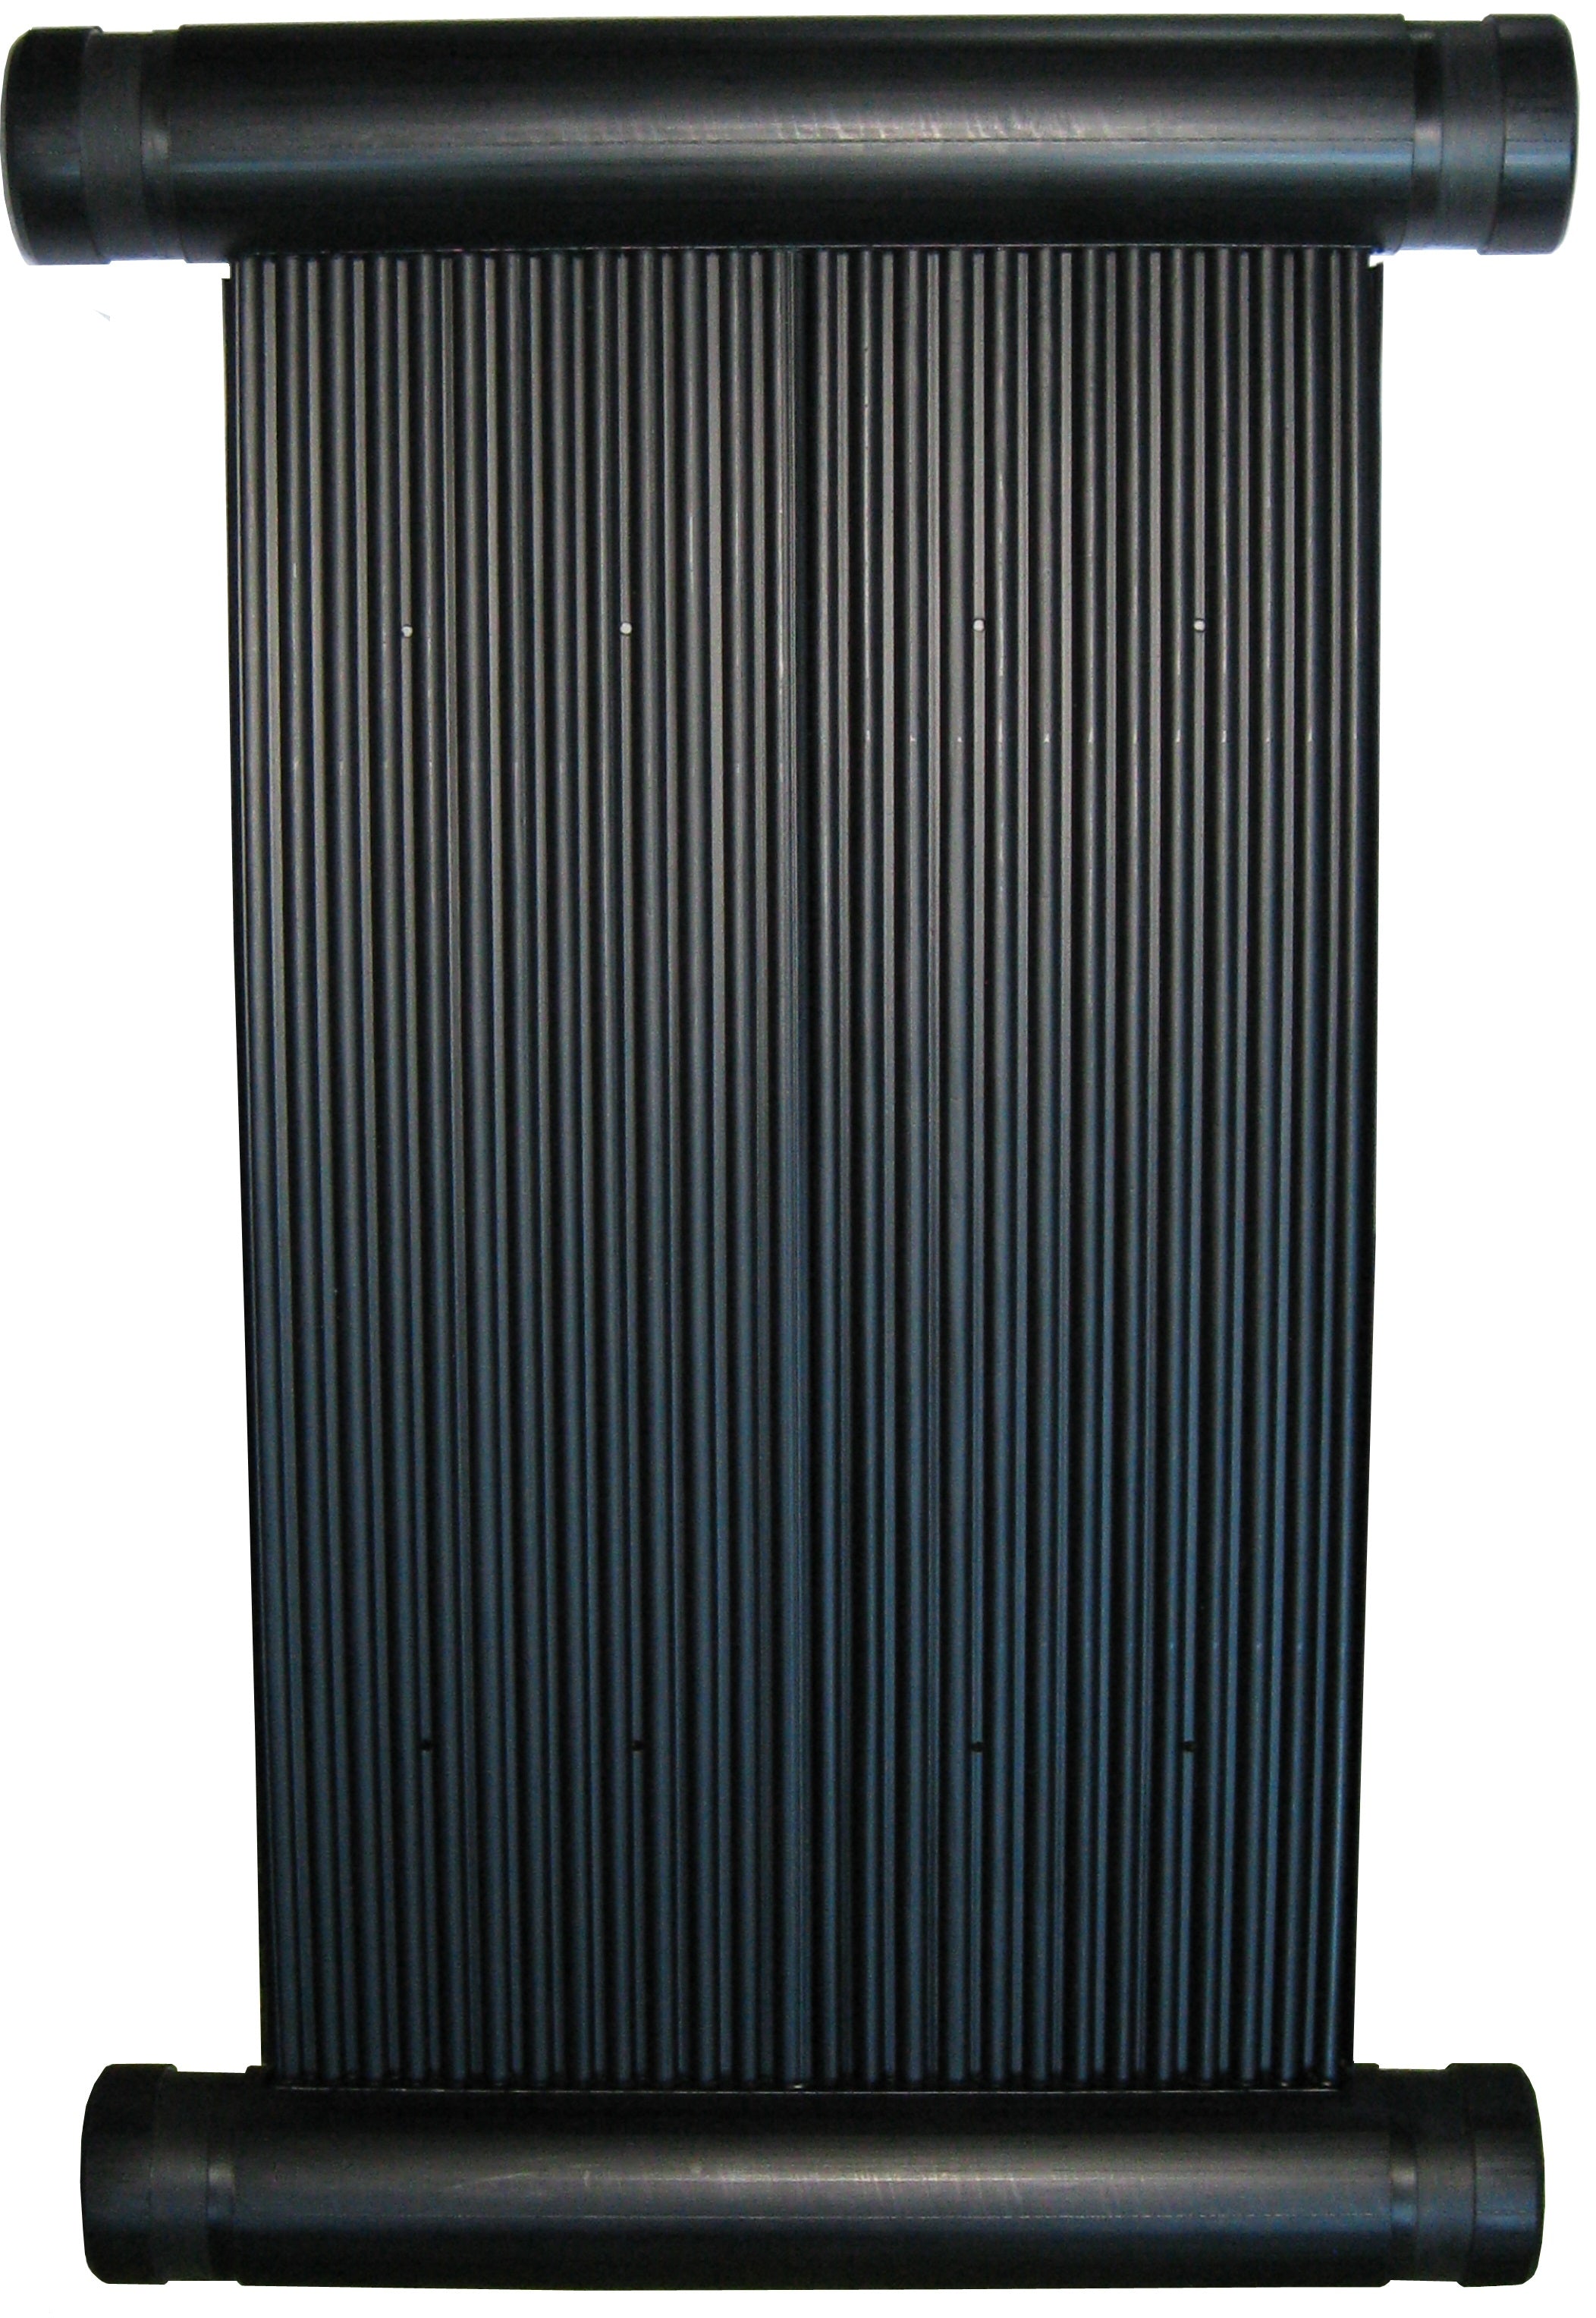 Aquasol Solar Pool Heating Panel 4' X 10' - 2" Headers (Aq40-2)